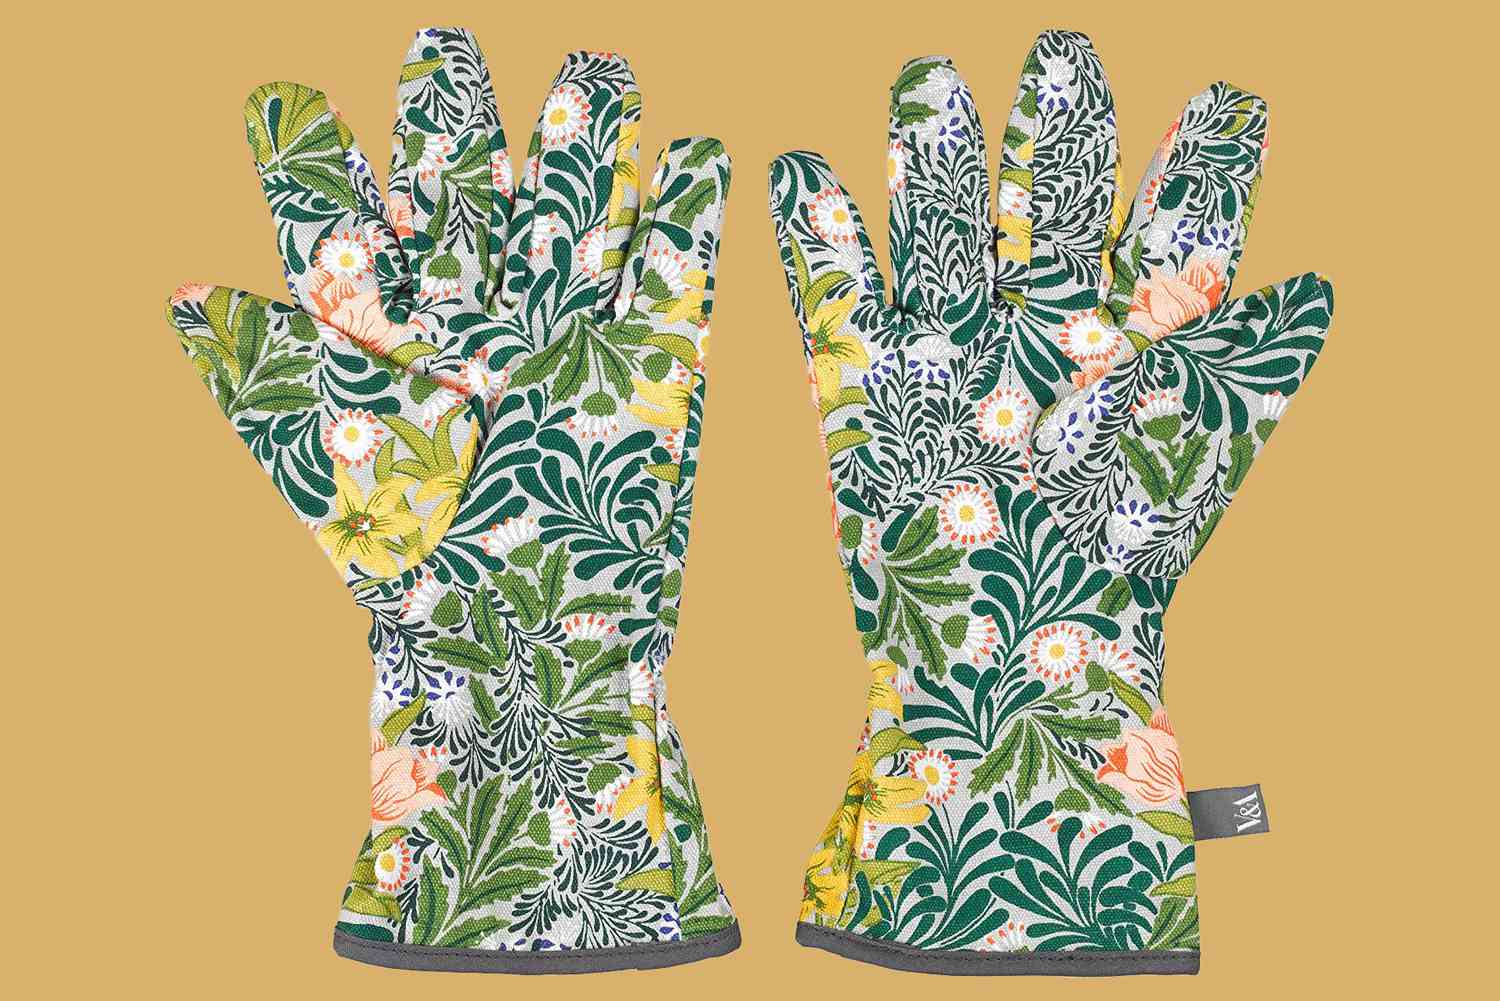 V&A William Morris Gardening Gloves